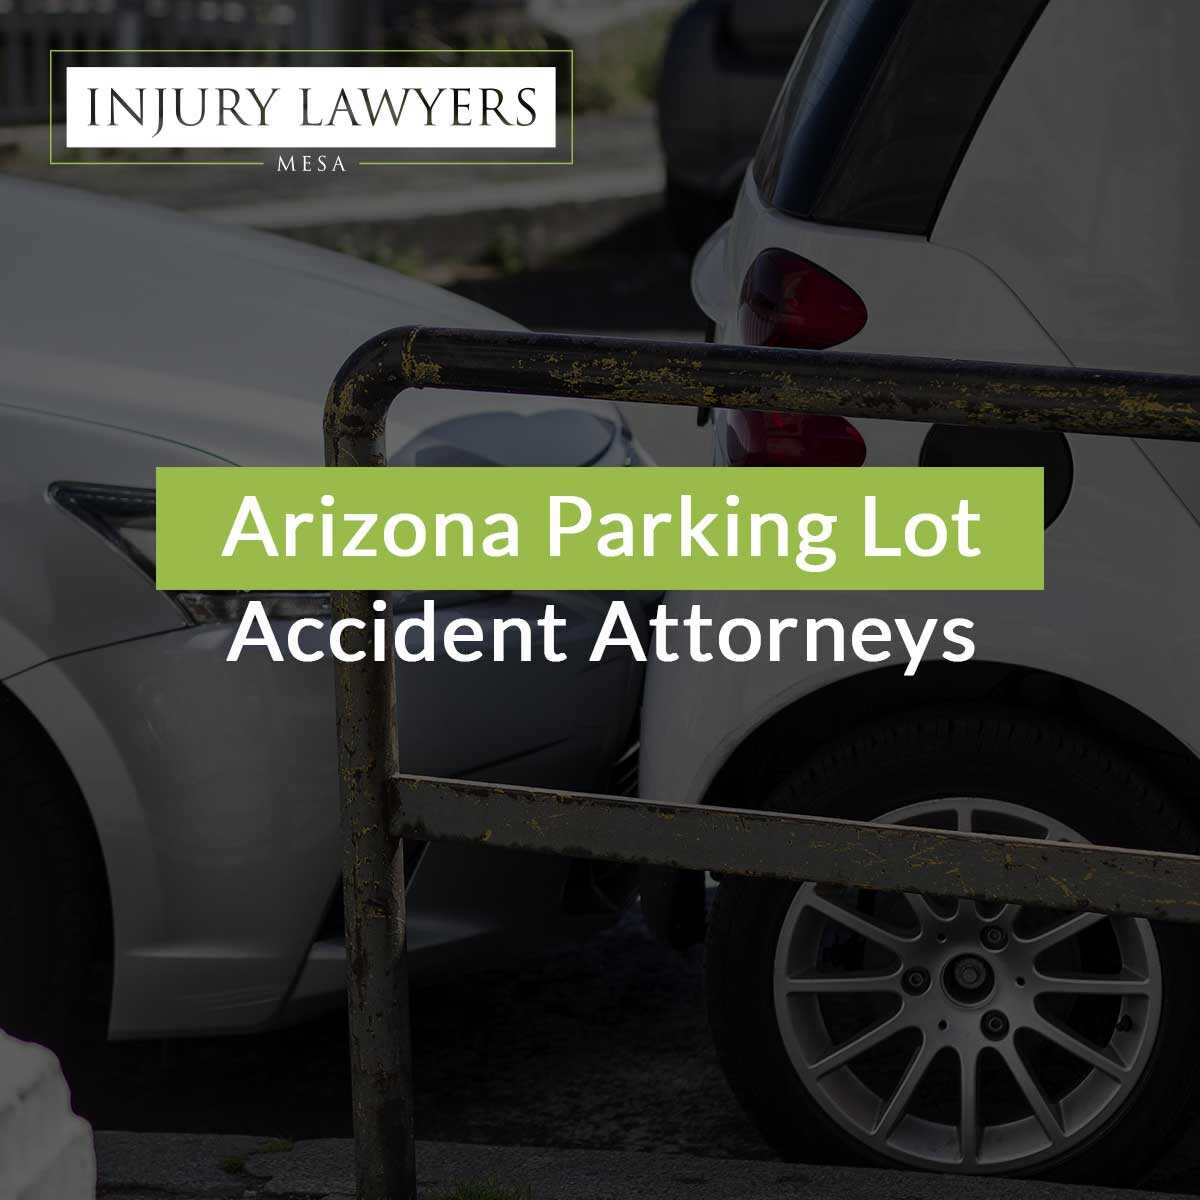 Arizona Parking Lot Accident Attorneys